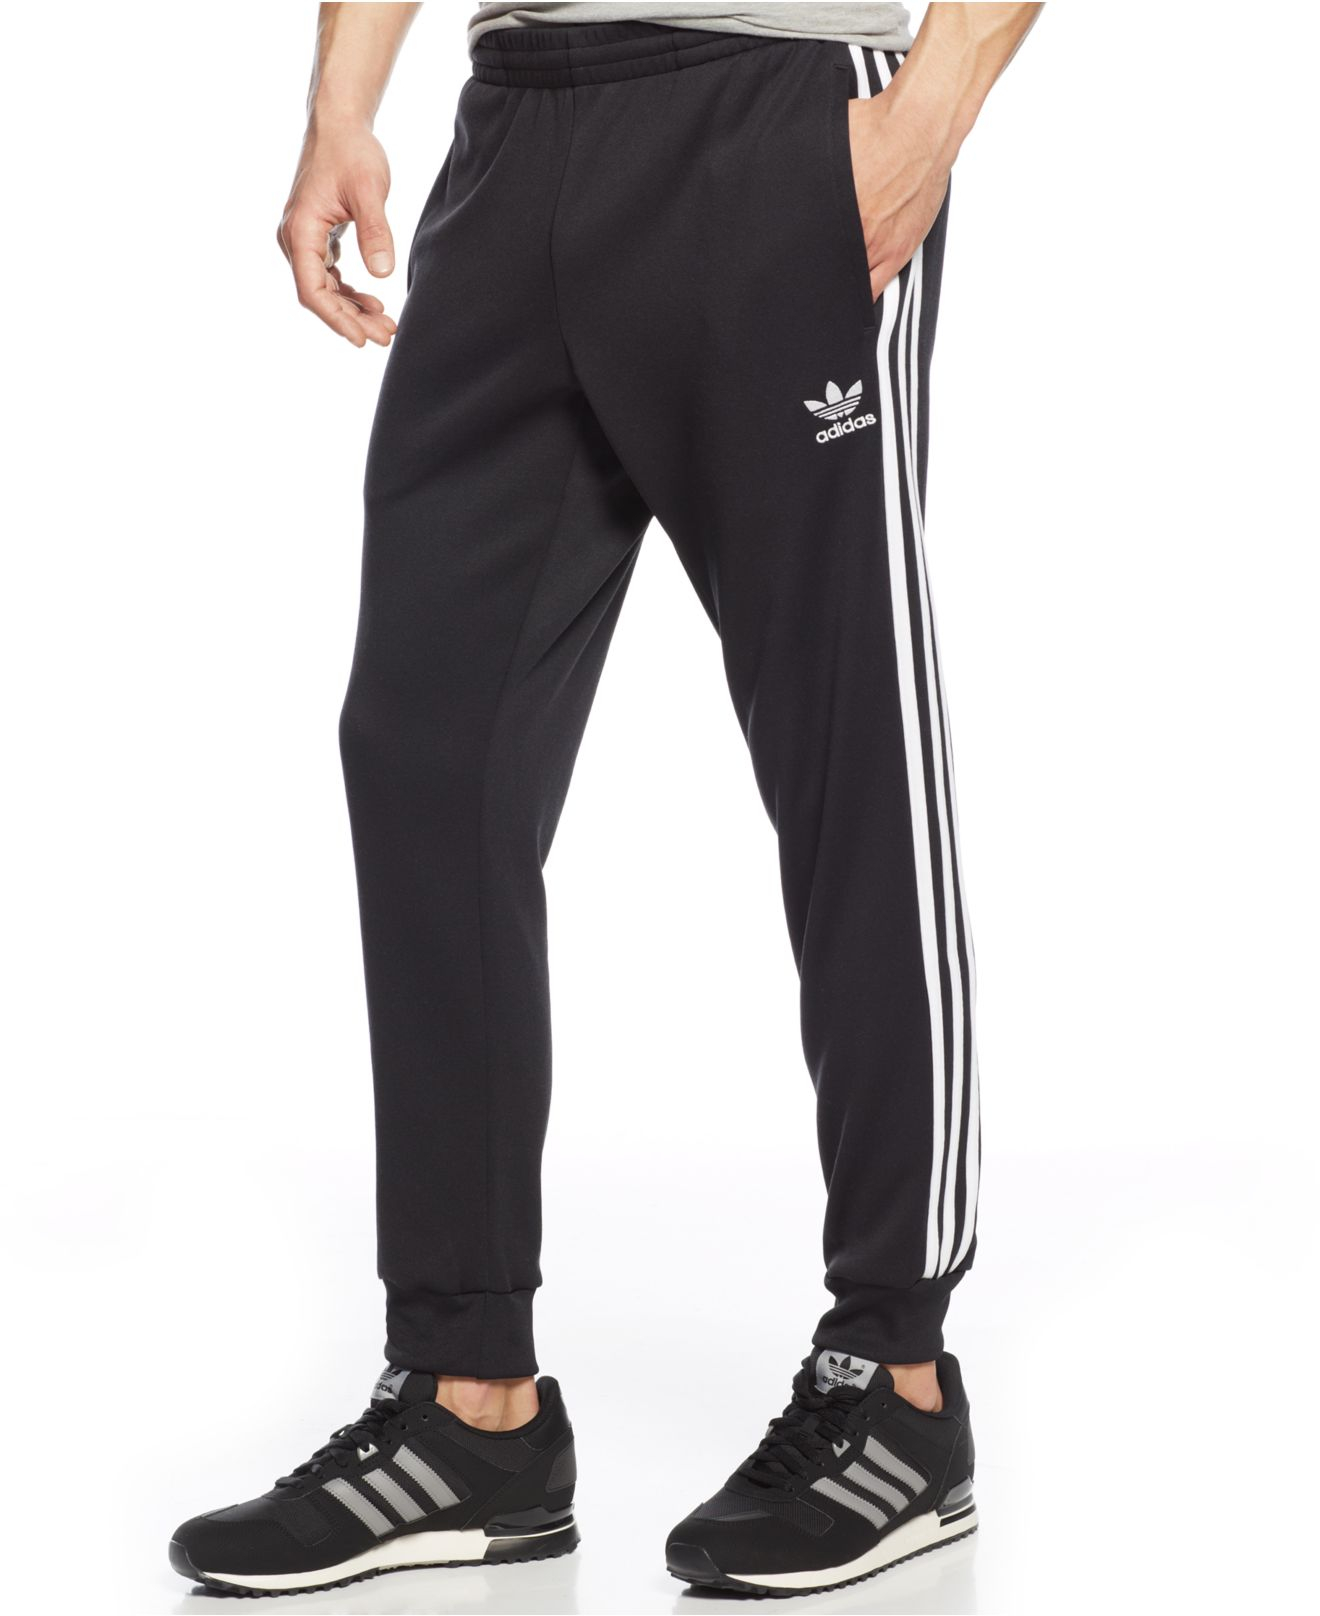 adidas Originals Striped Joggers in Black for Men - Lyst